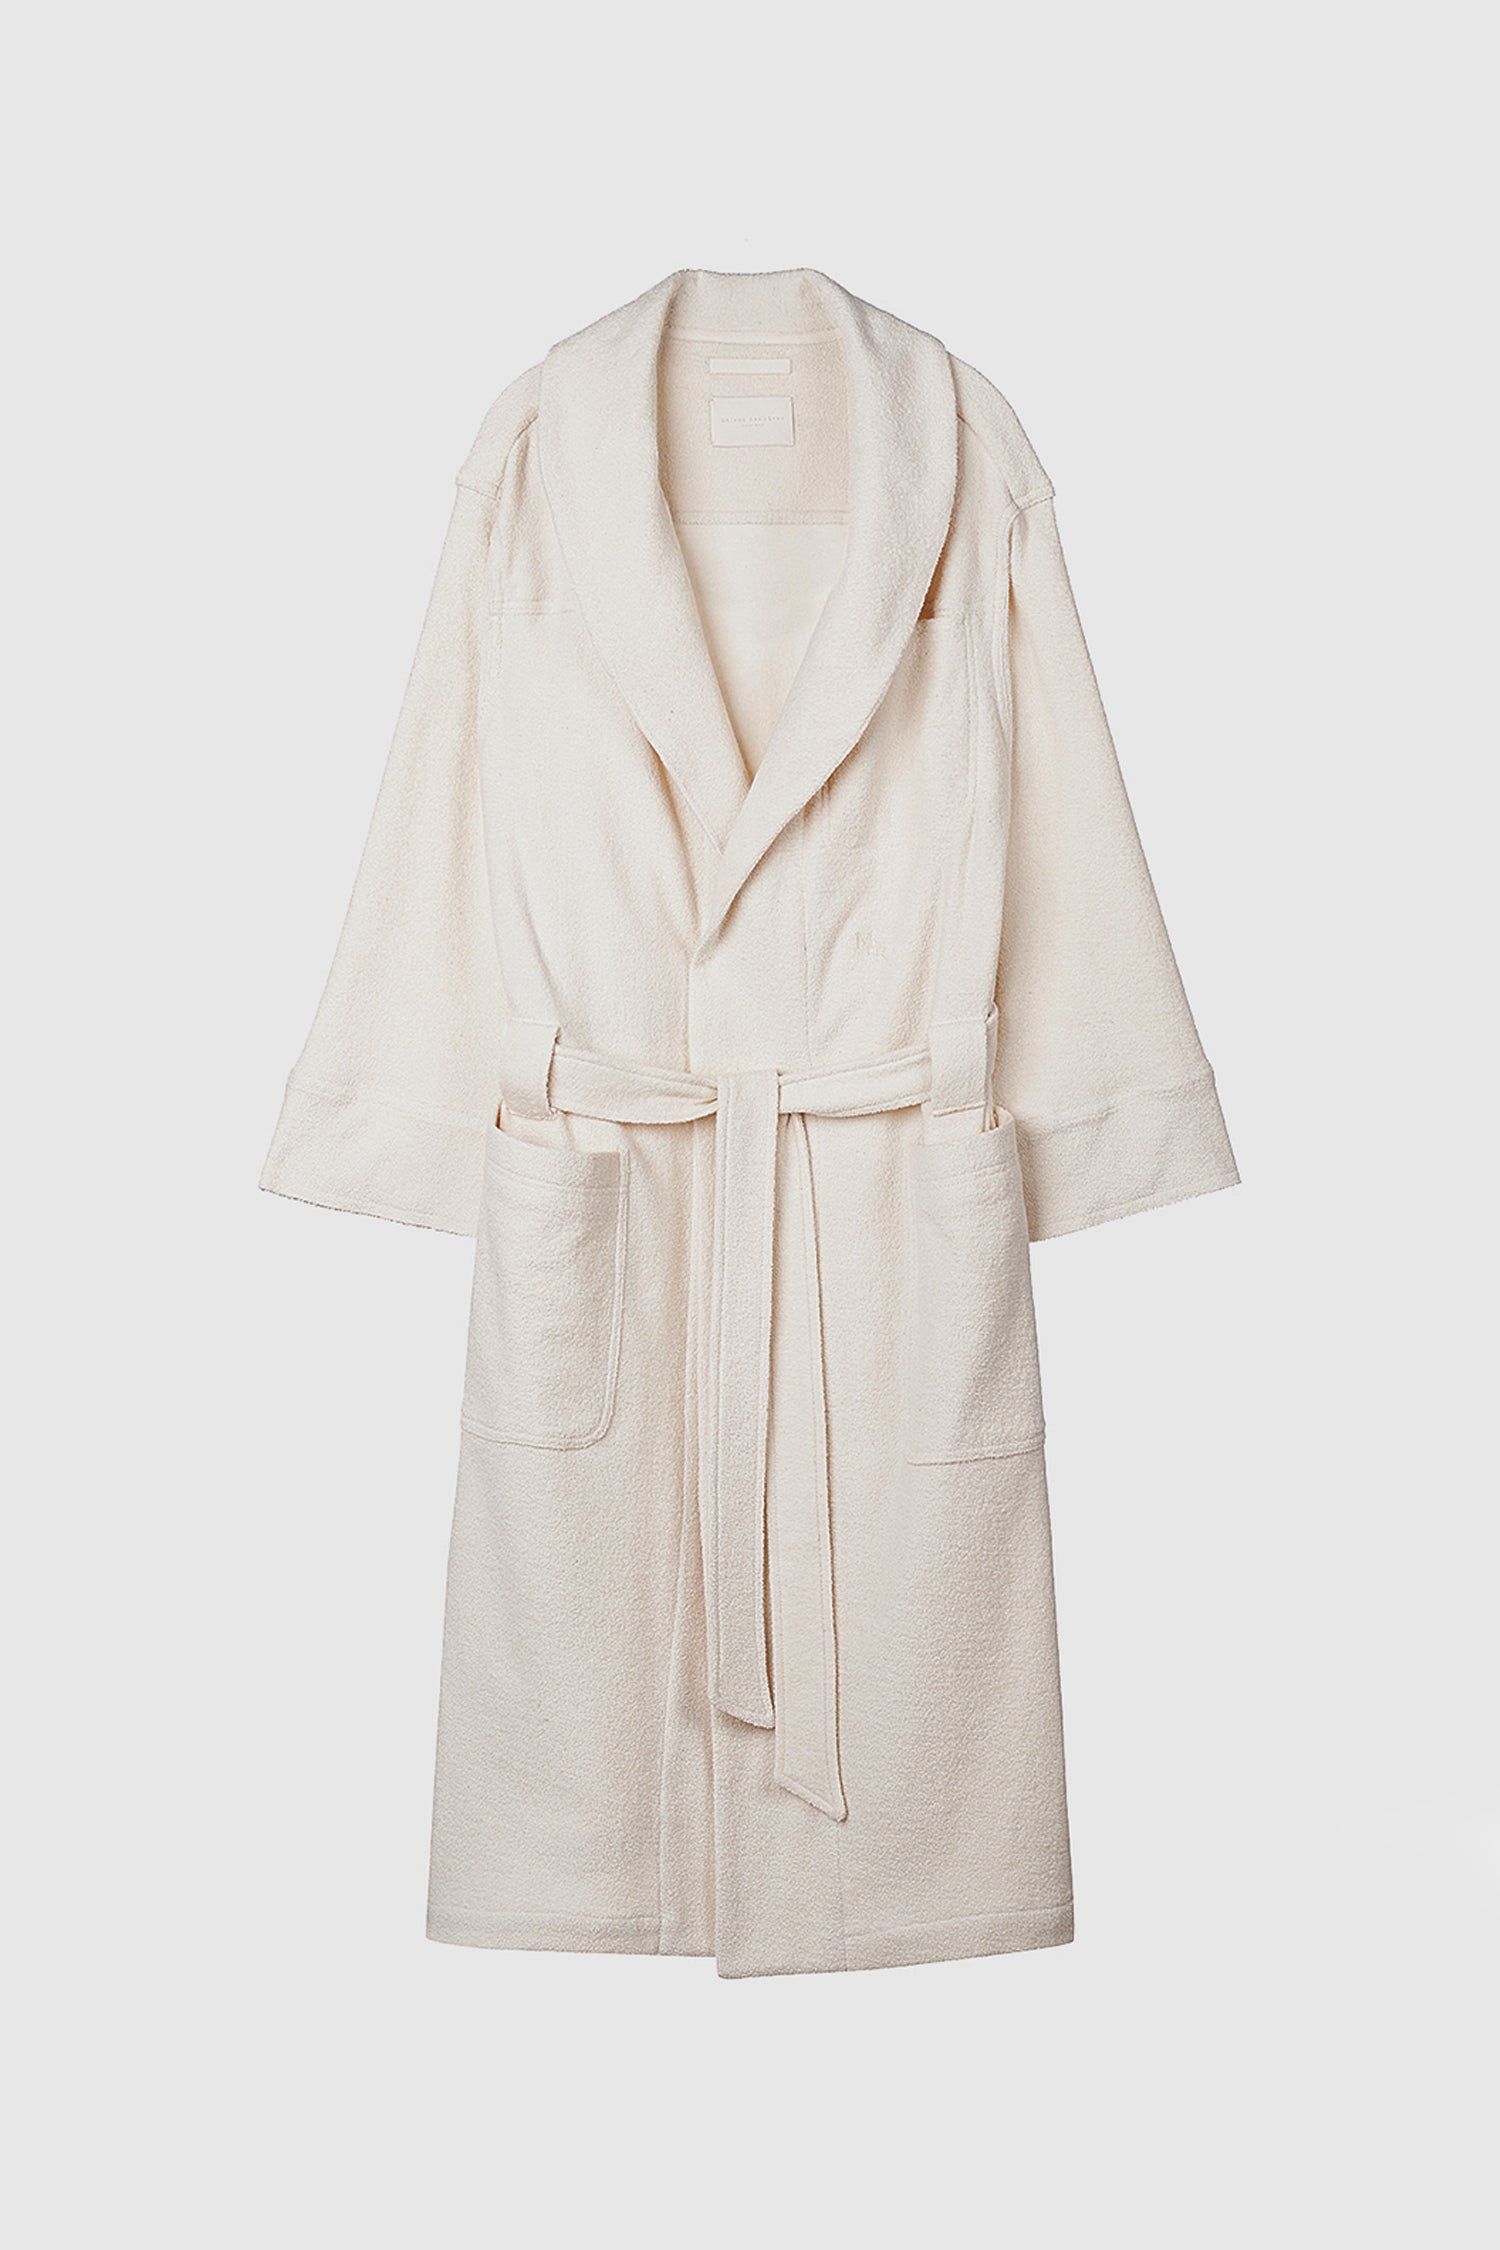 Tres Chic 100% Cotton Super Cozy Designer Bathrobe, One Size Fits All –  shoptwelvetwentynine